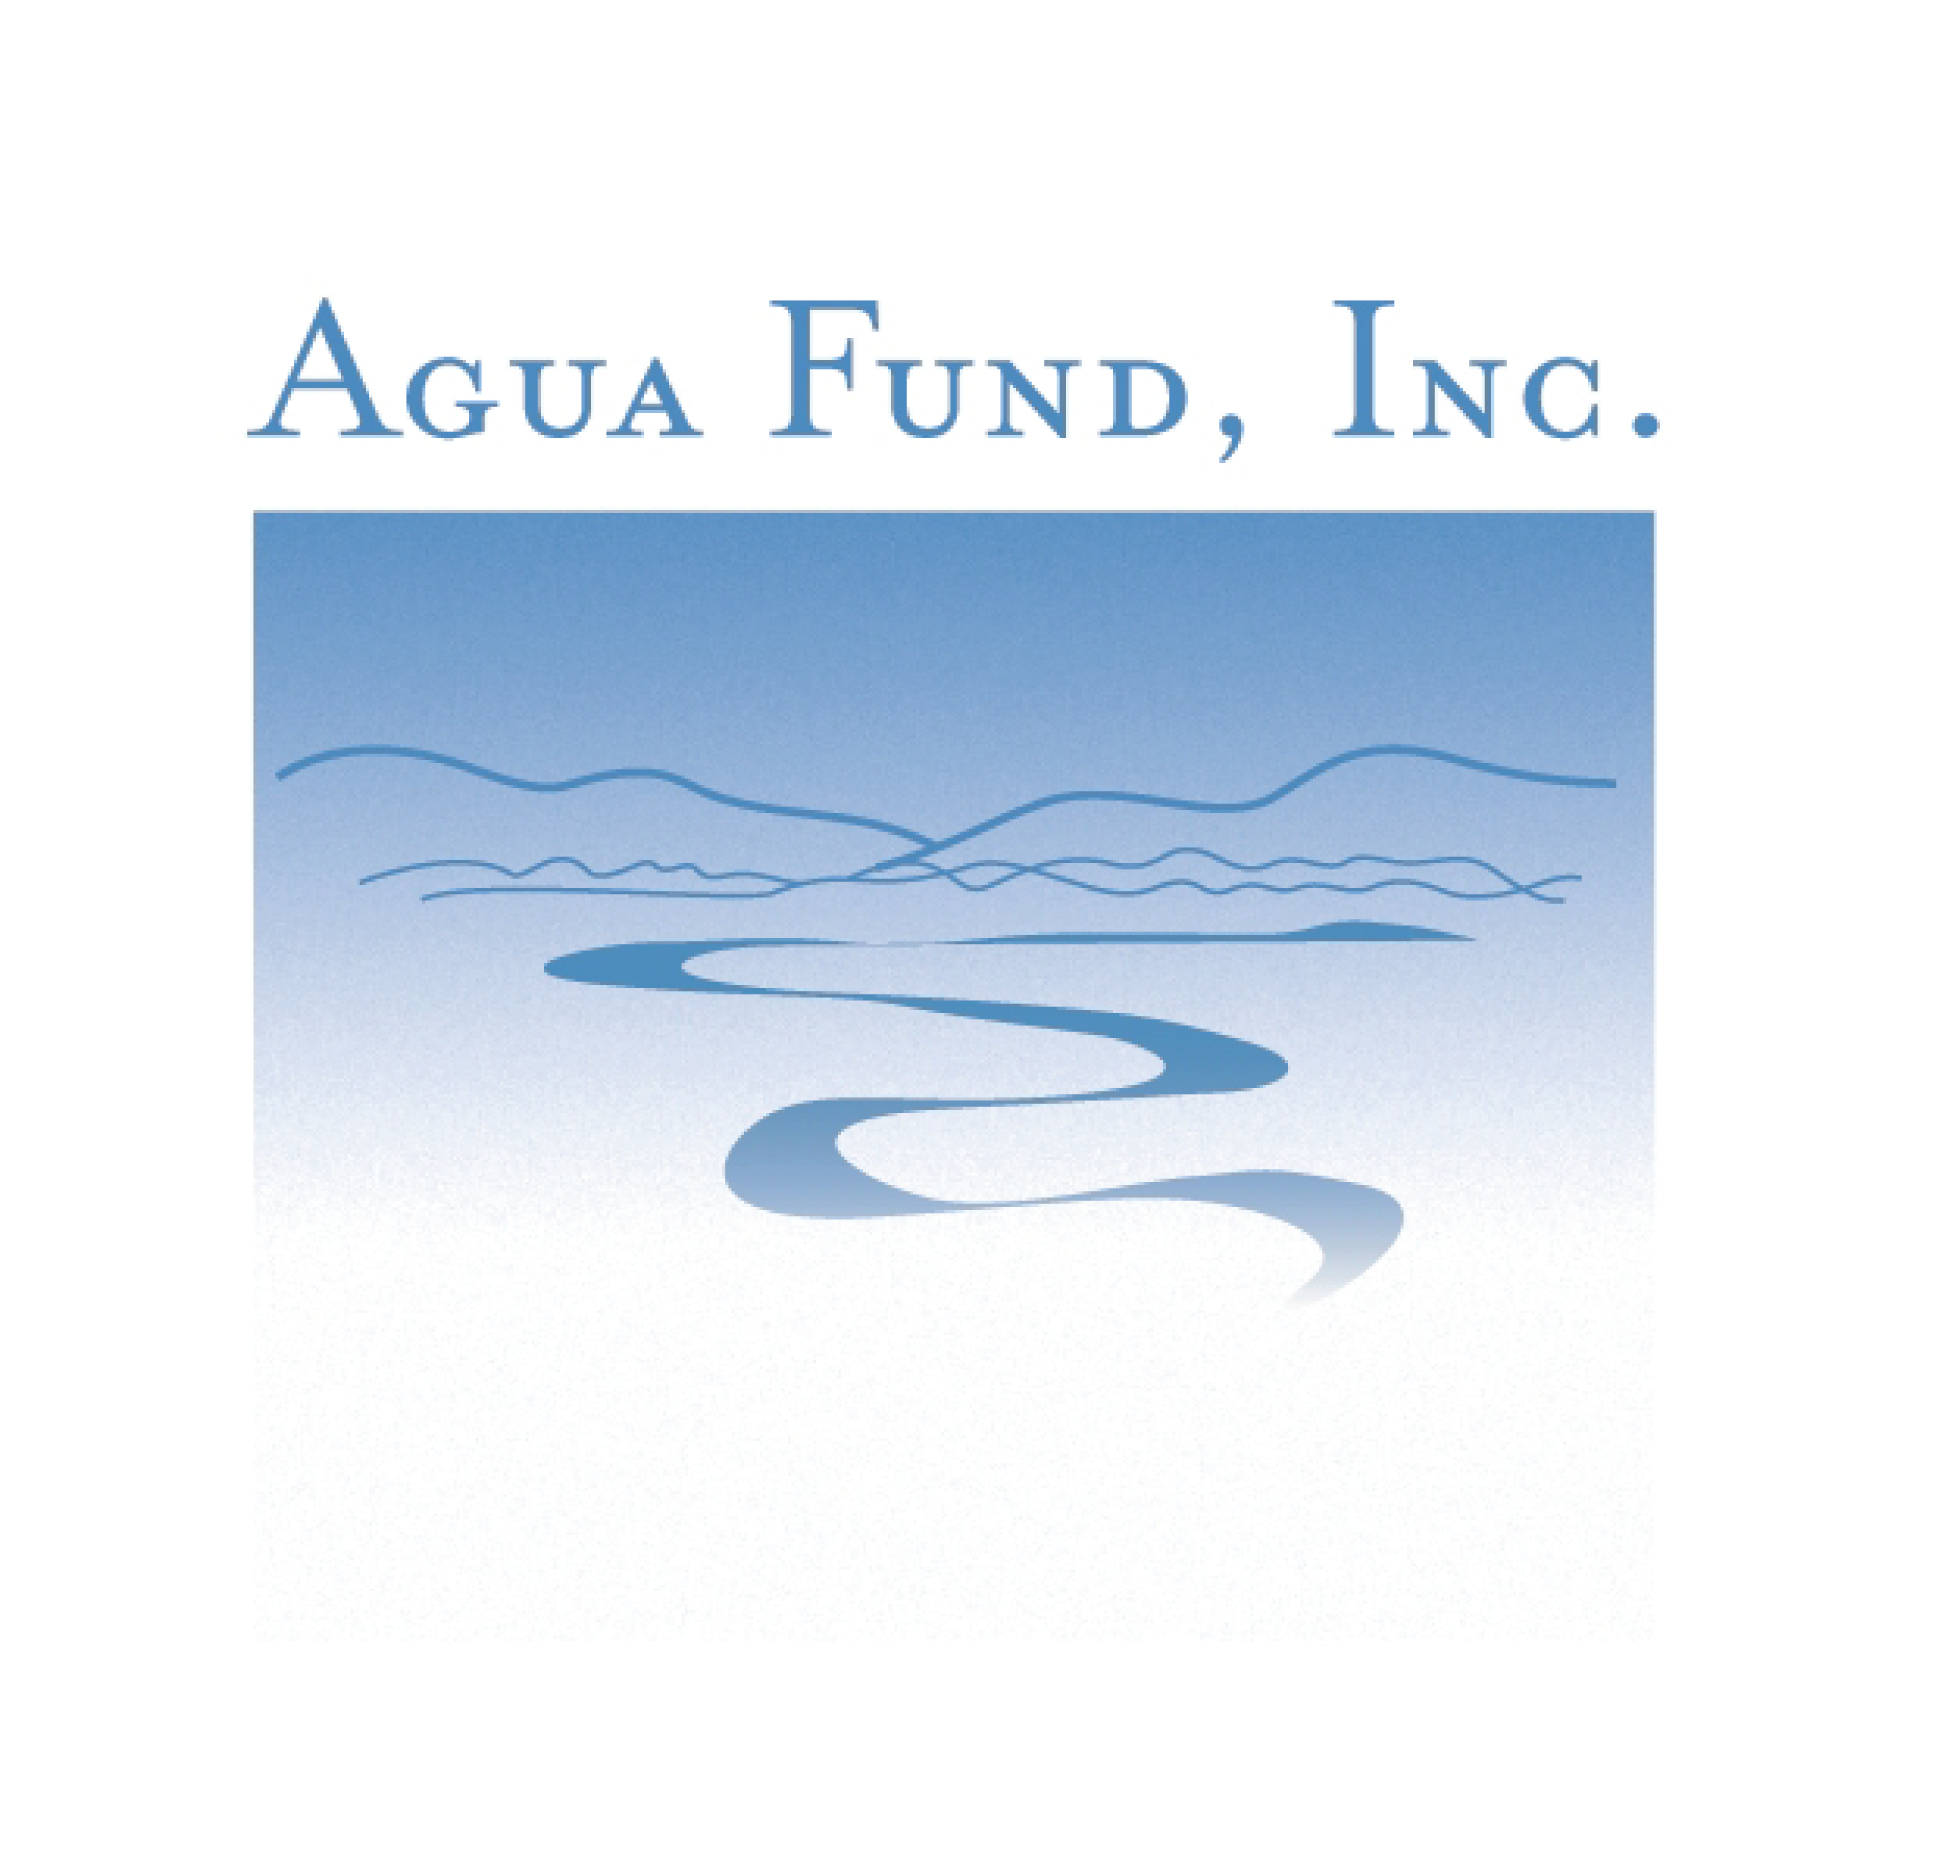 Agua Fund Logo showing a flowing river below "Agua Fund Inc"